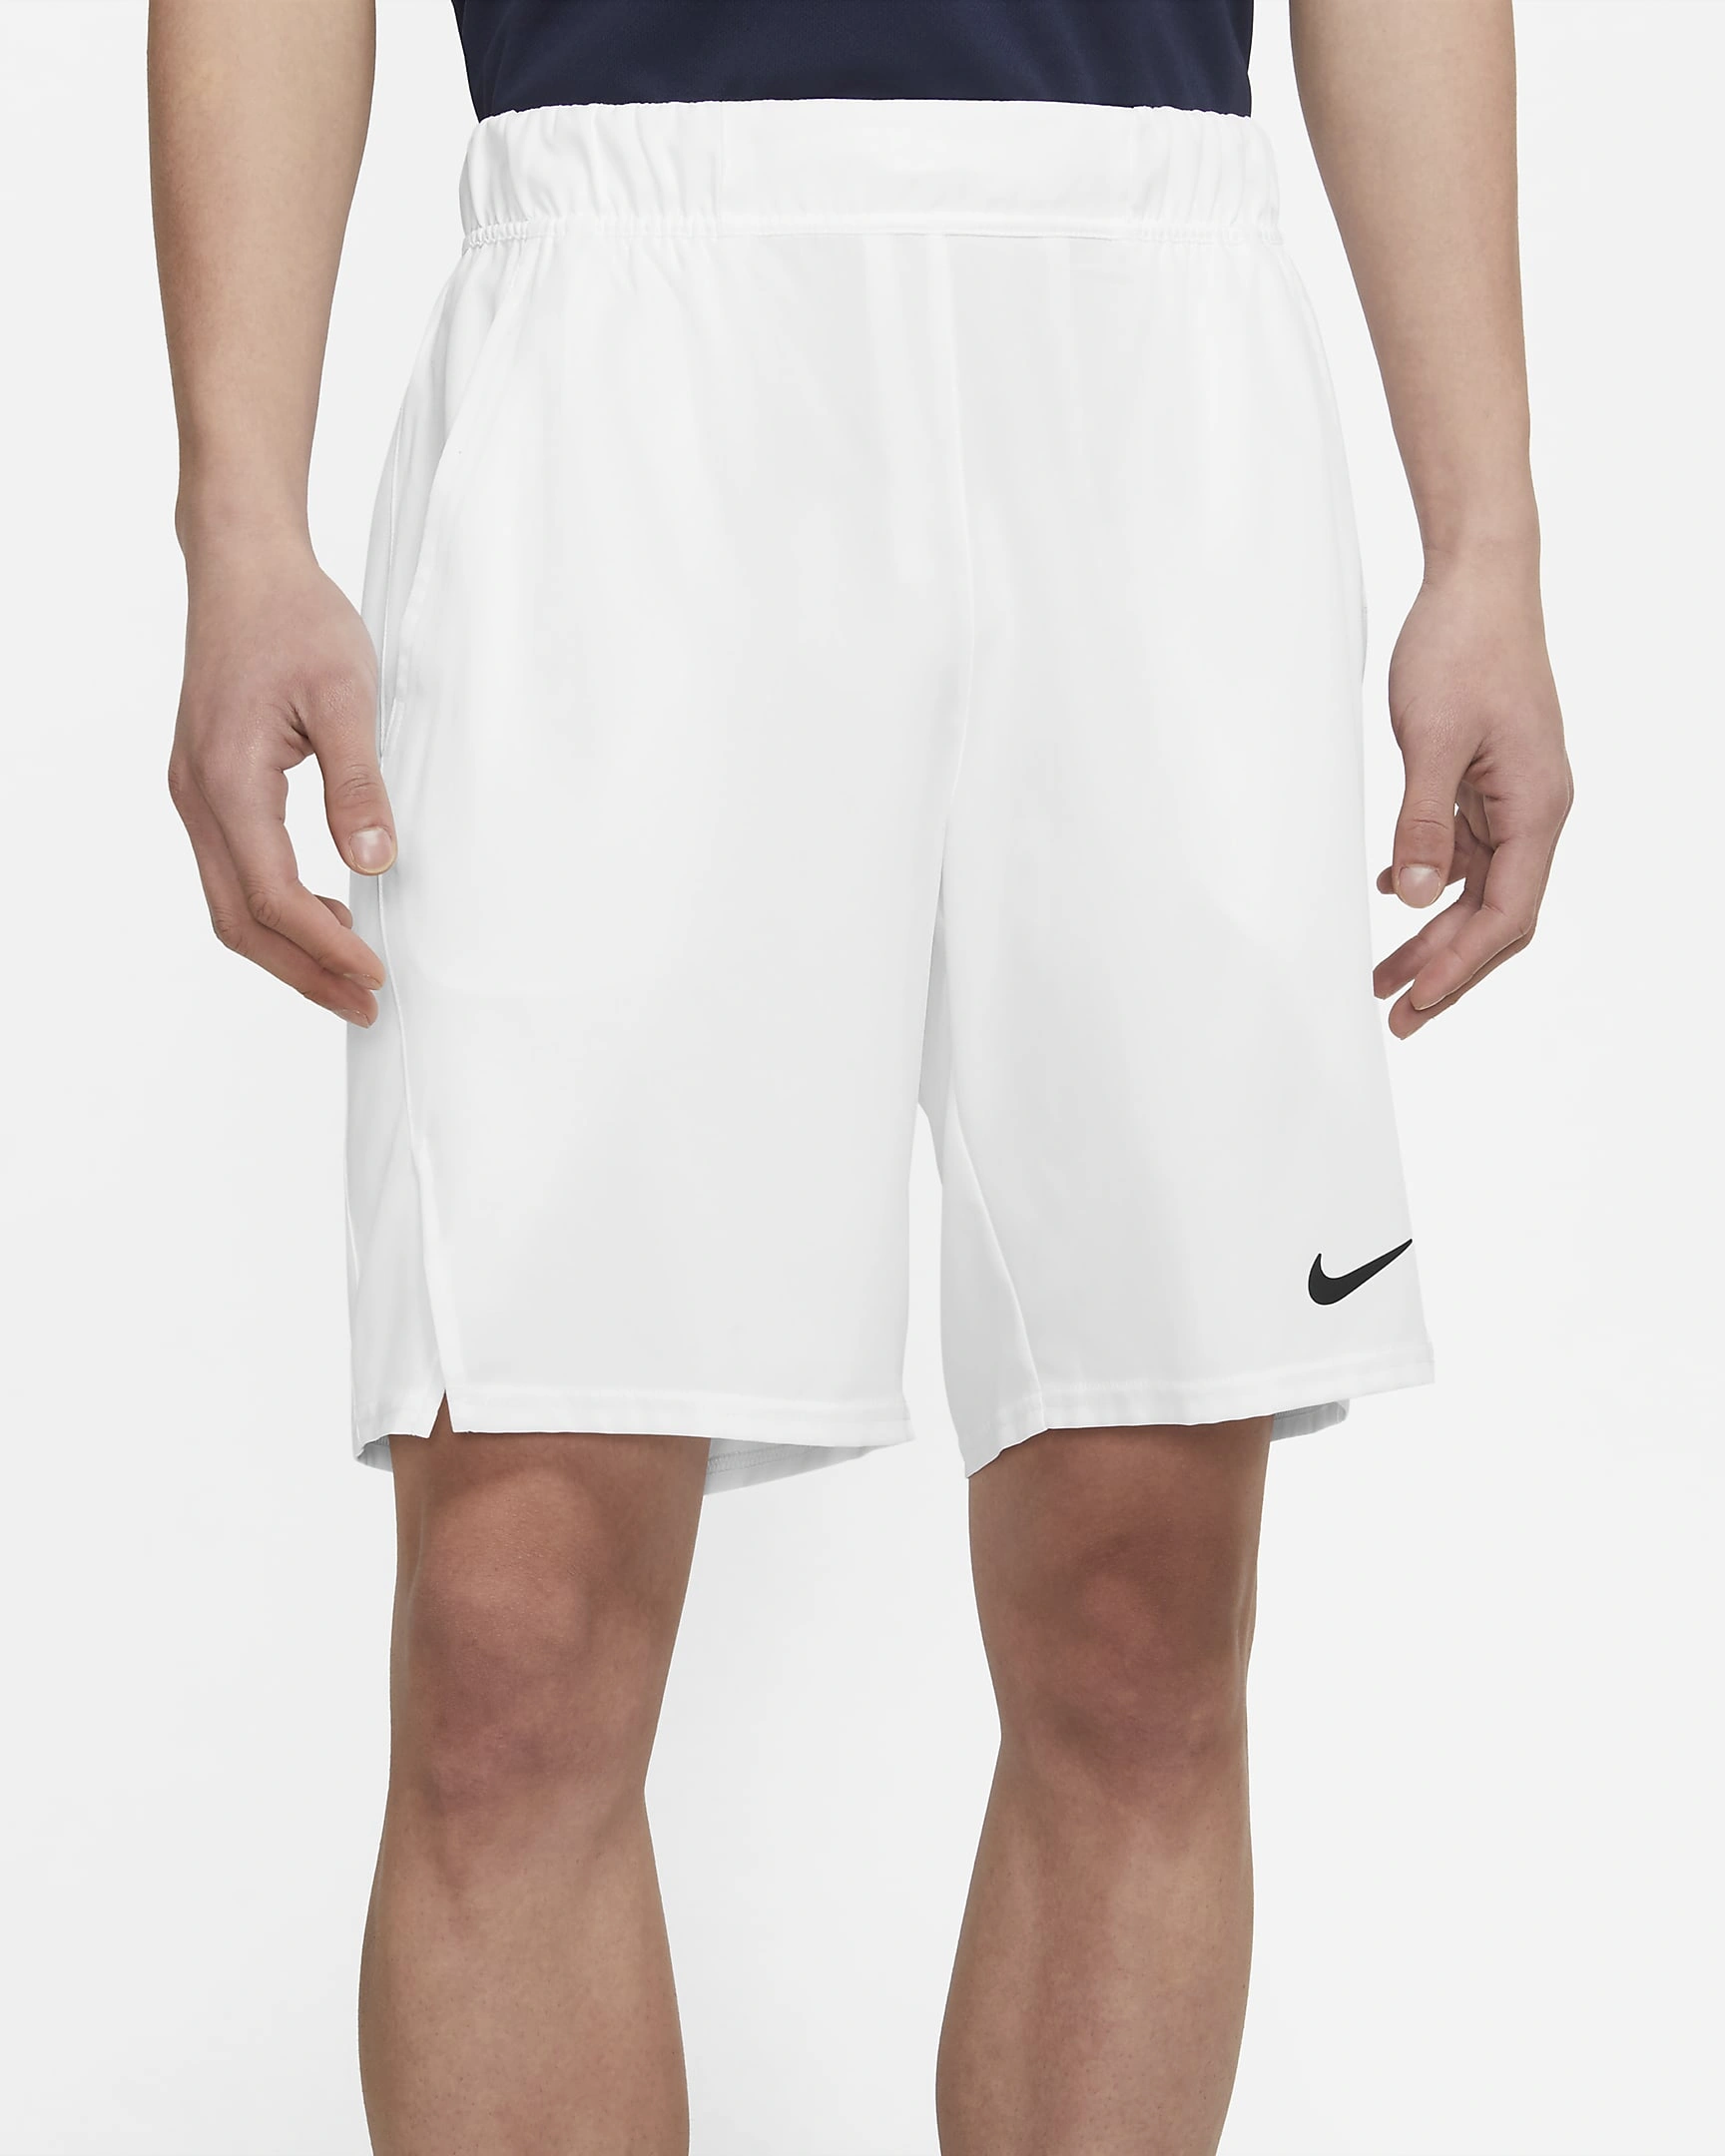 Nike Court Advantage 9in Men's Tennis Shorts - White/Black